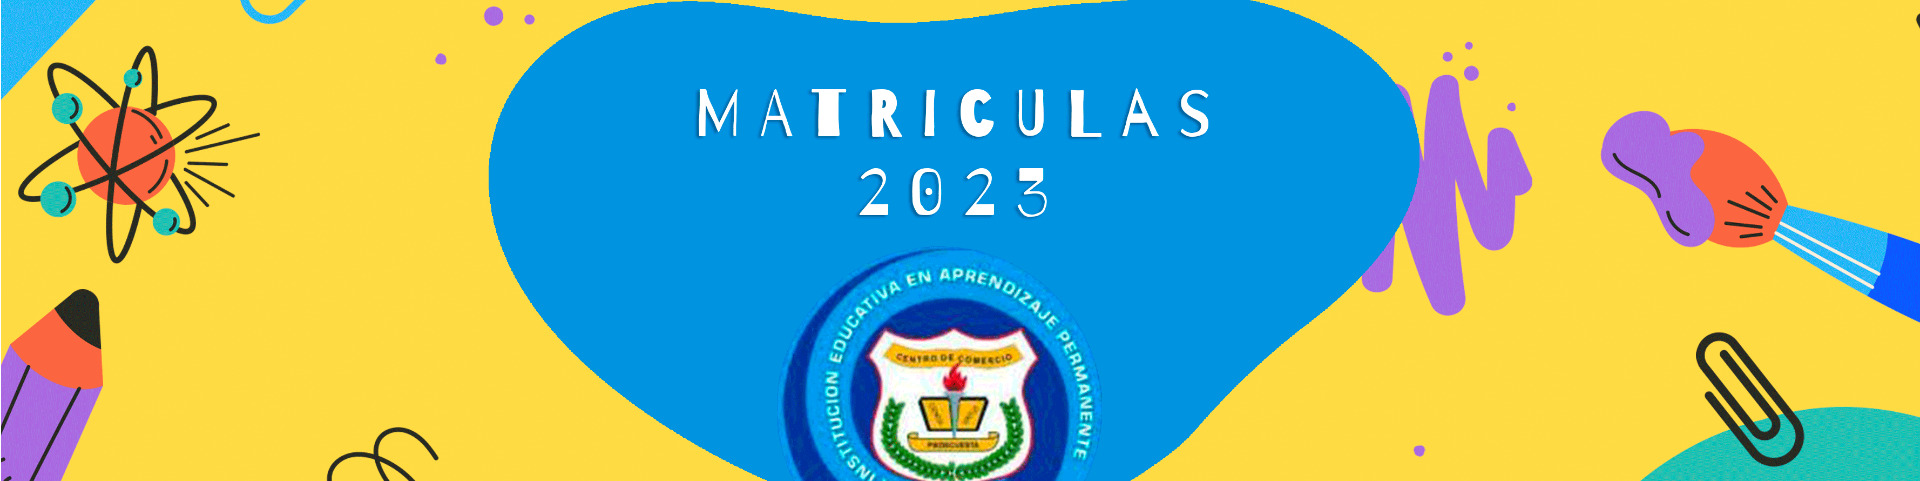 Instructivo matrículas estudiantes admitidos 2023 - Imagen 1